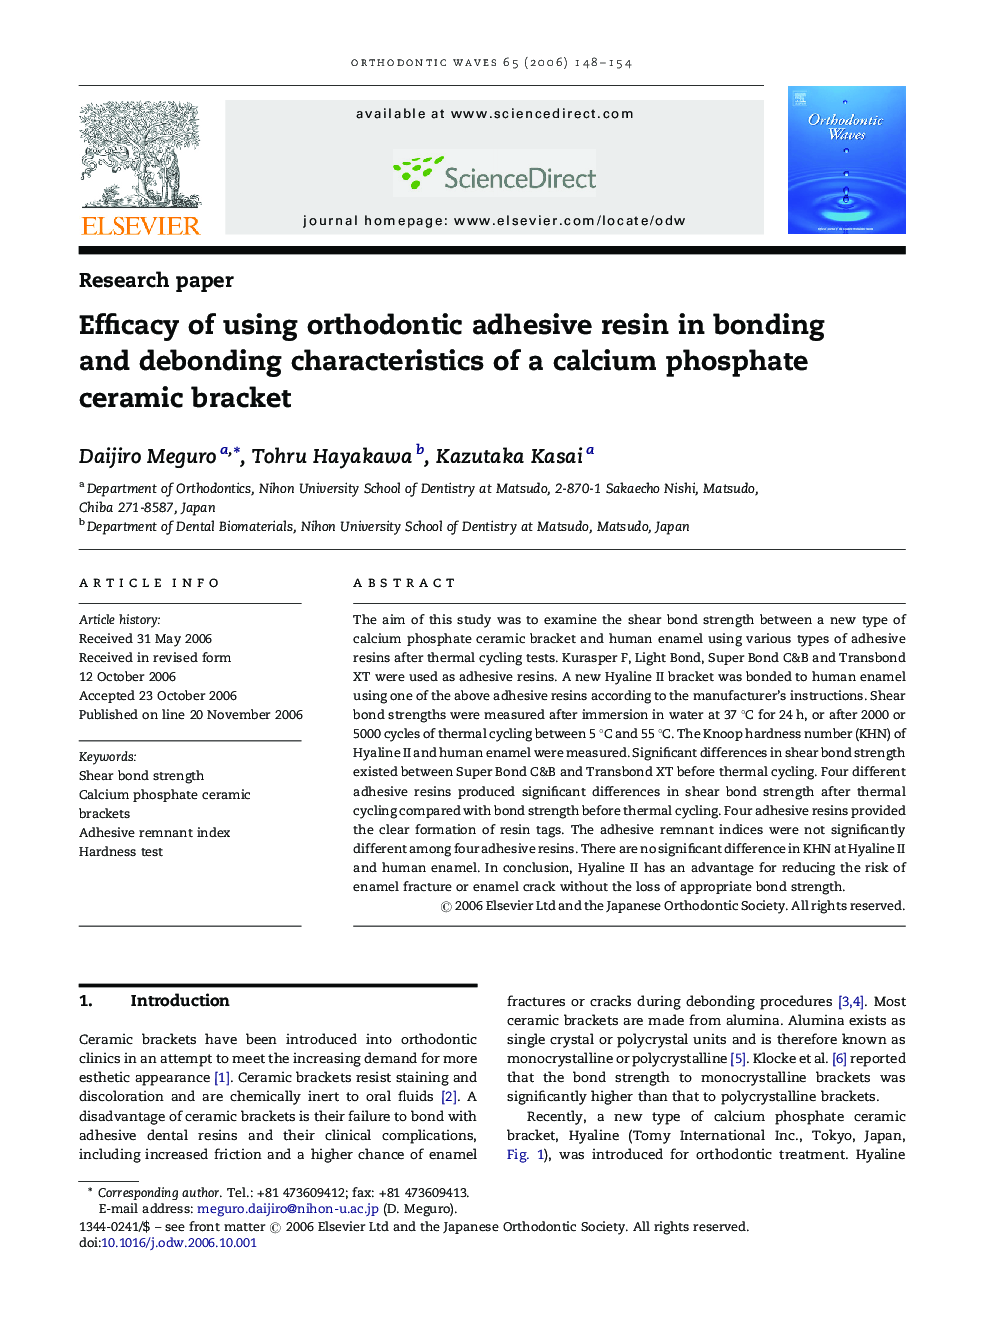 Efficacy of using orthodontic adhesive resin in bonding and debonding characteristics of a calcium phosphate ceramic bracket